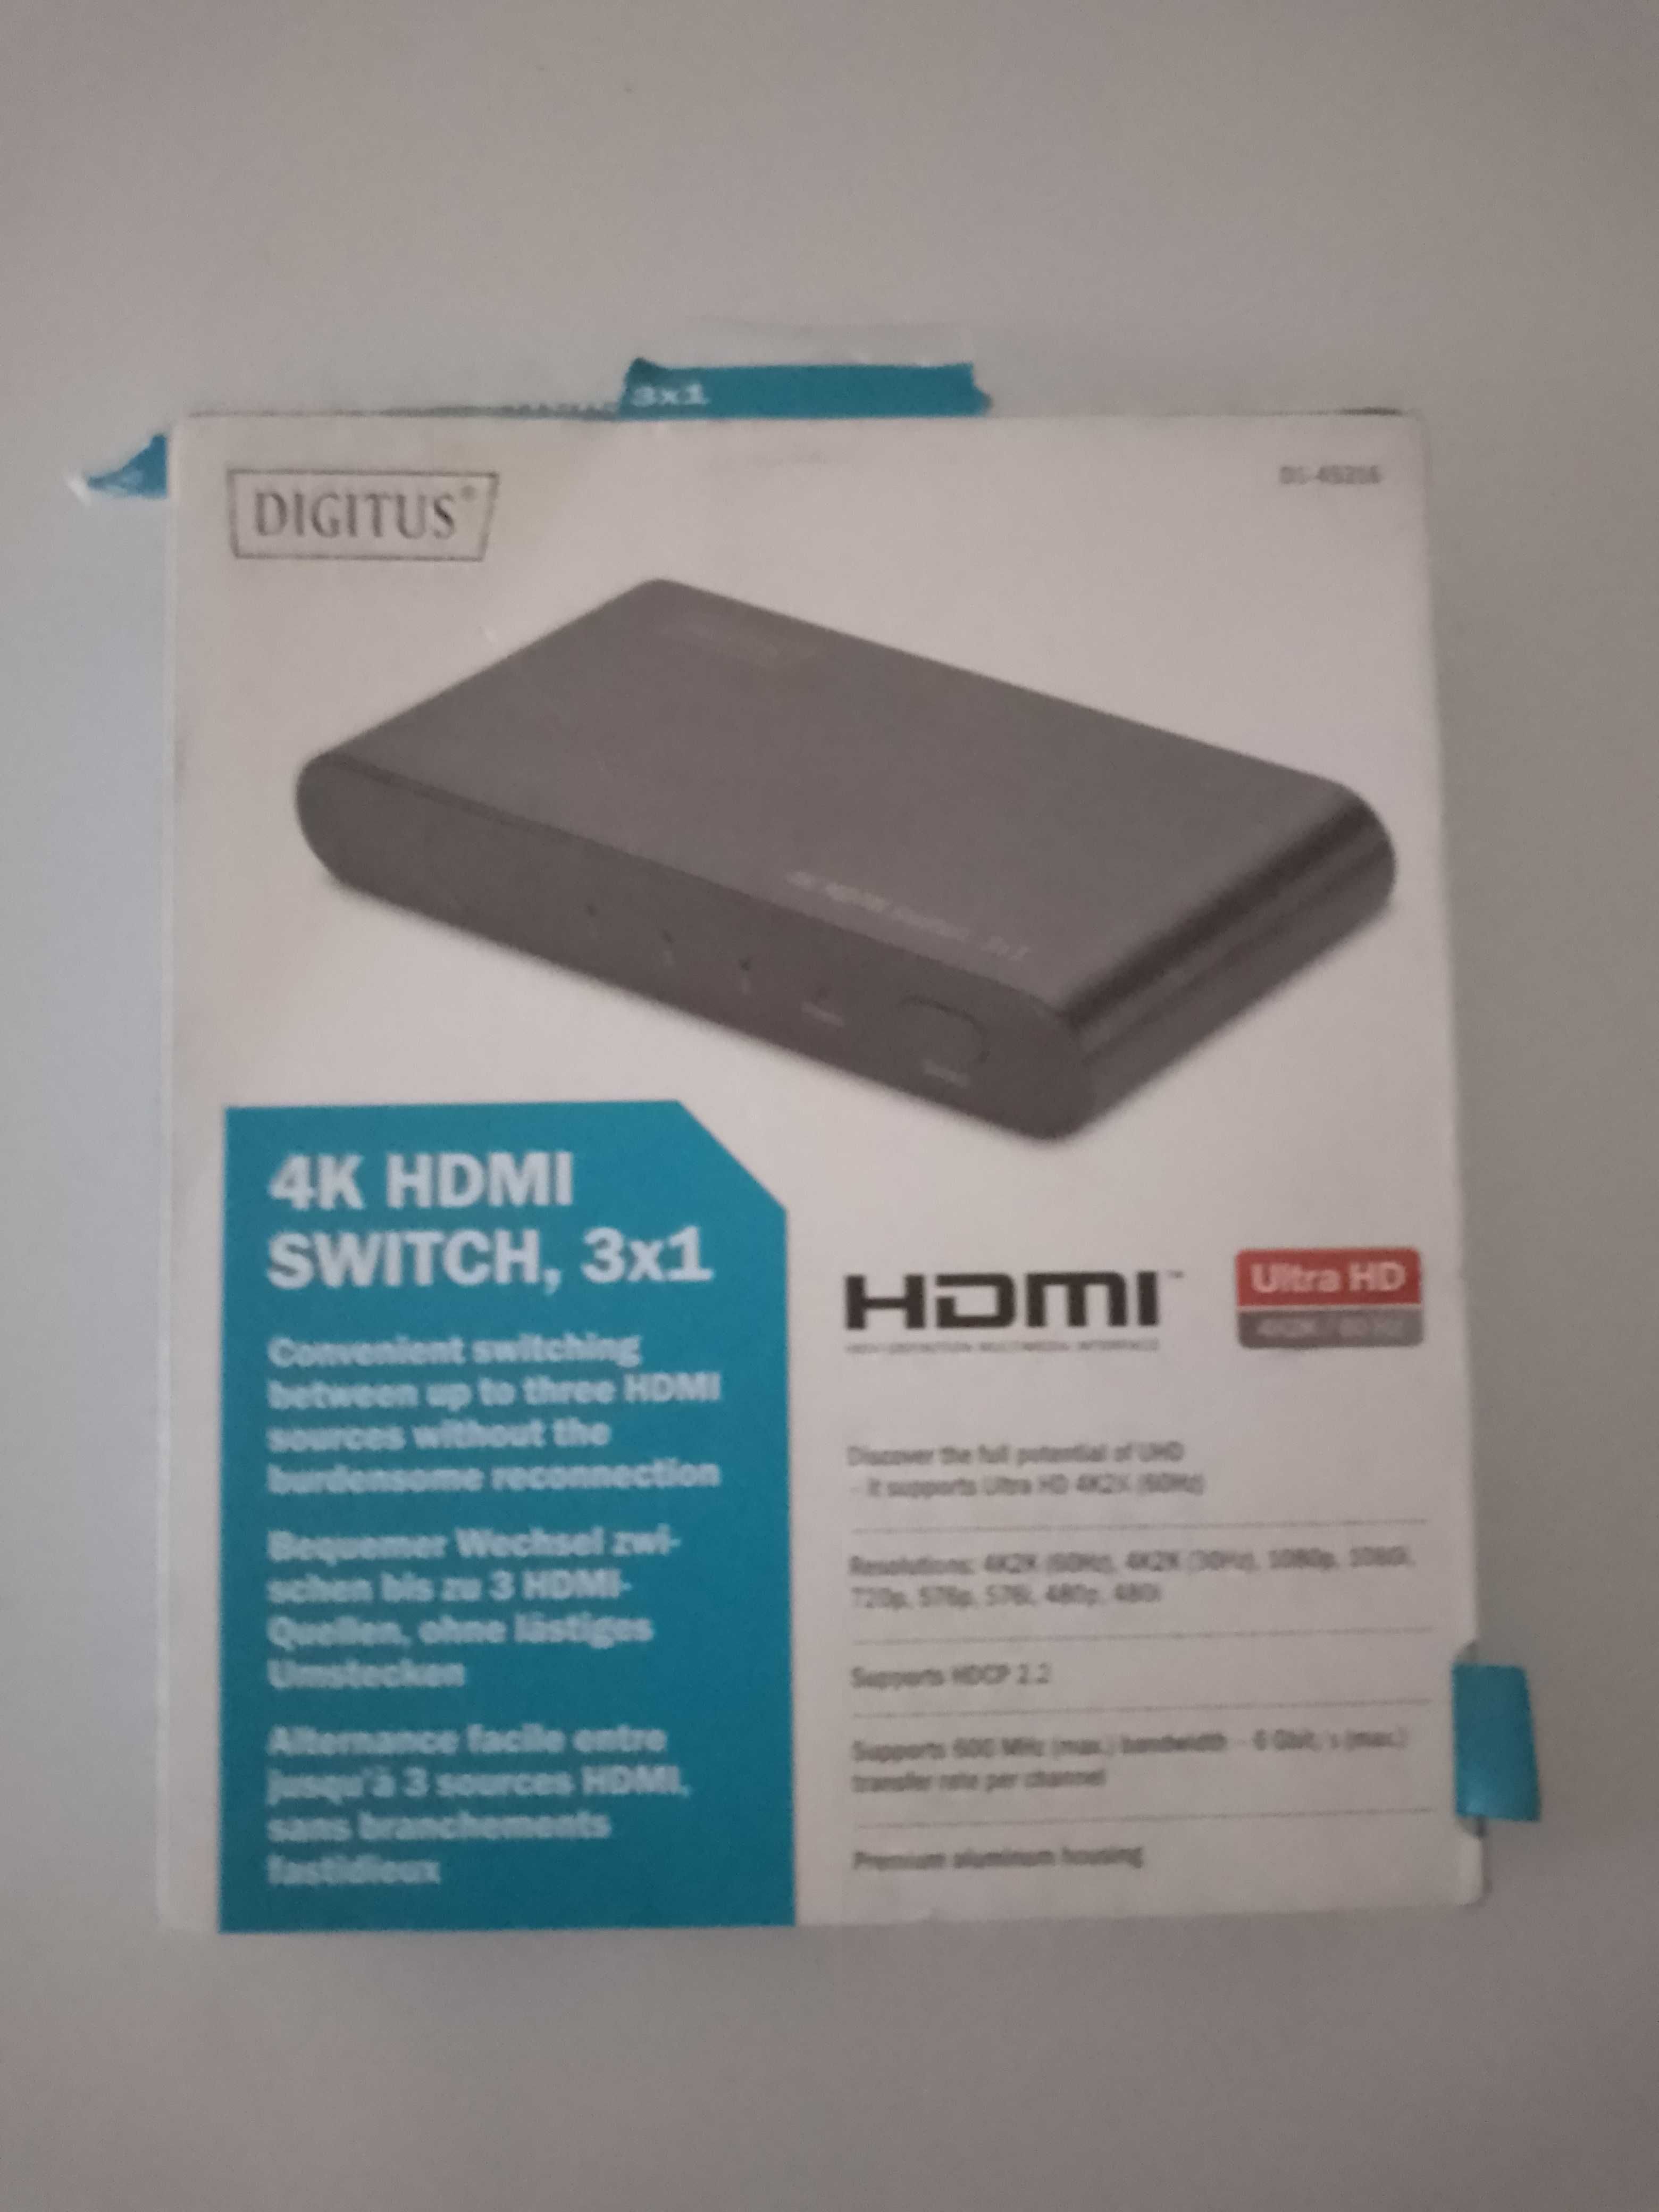 Digitus 4K HDMI switch 3x1 Ultra HD with 60 Hz